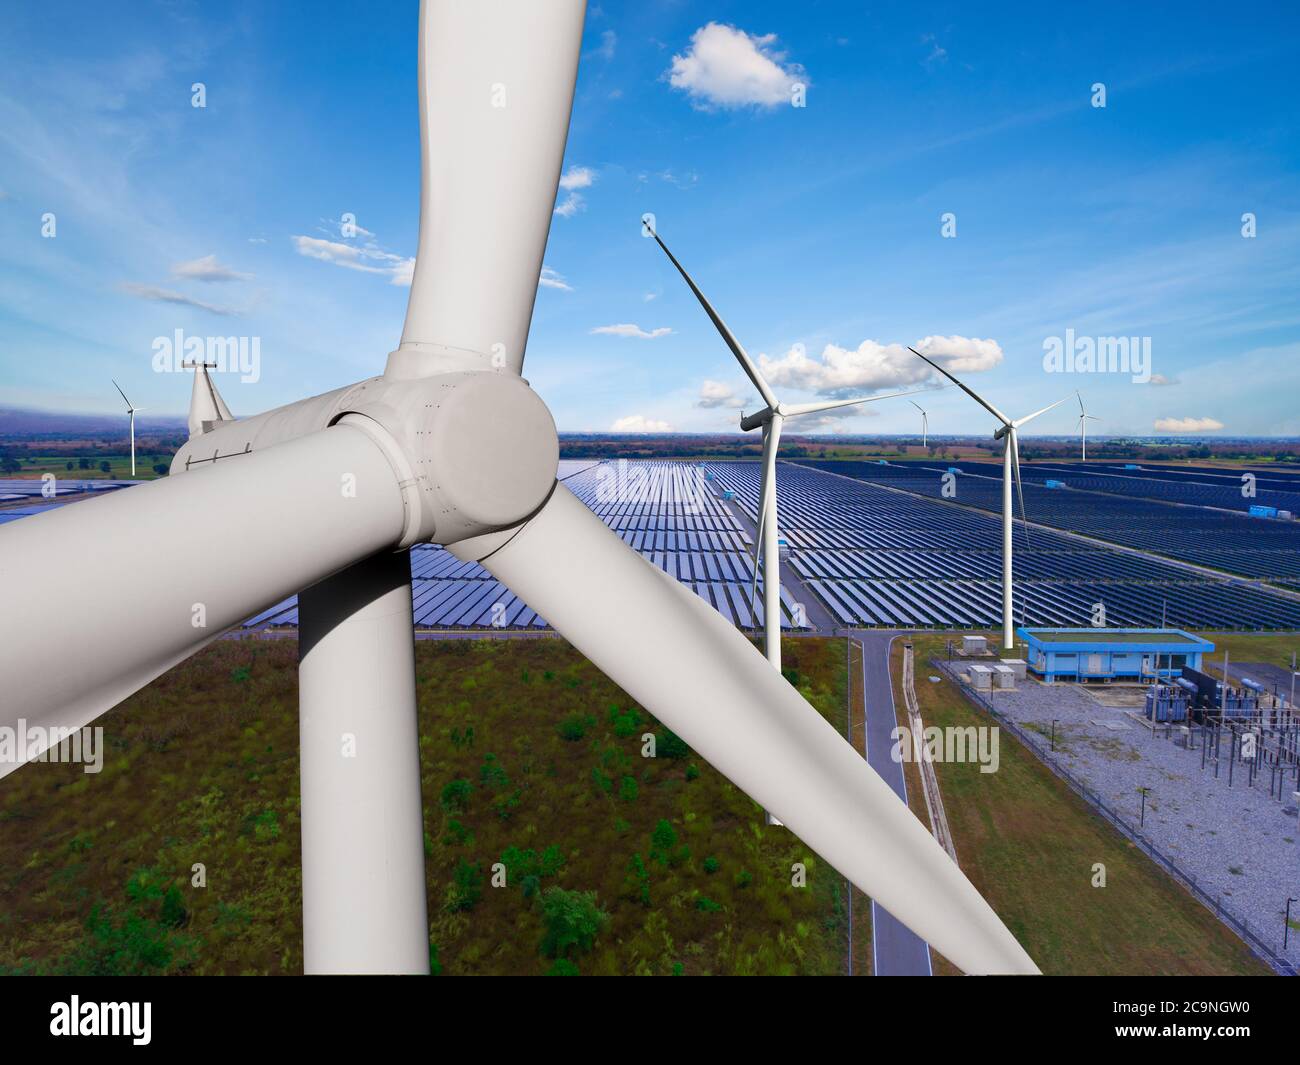 Solarpanel und Windkraftanlage Farm saubere Energie. Stockfoto